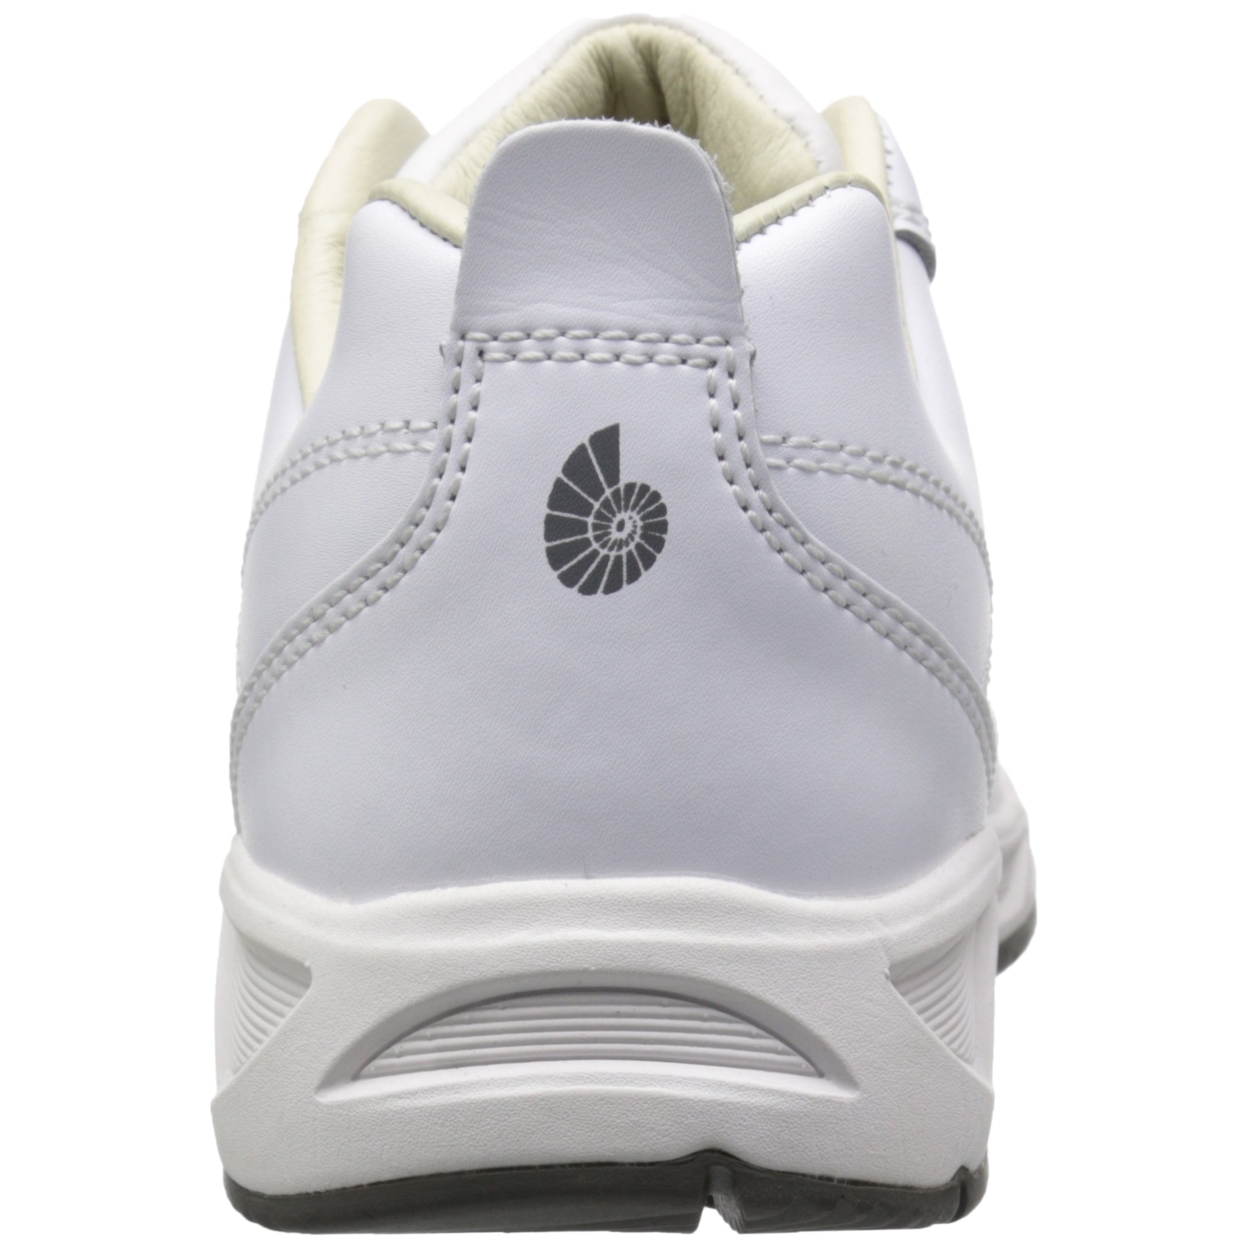 FSI FOOTWEAR SPECIALTIES INTERNATIONAL NAUTILUS Nautilus 4046 ESD No Exposed Metal Soft Toe Clean Room Athletic Shoe WHITE - WHITE, 9-W